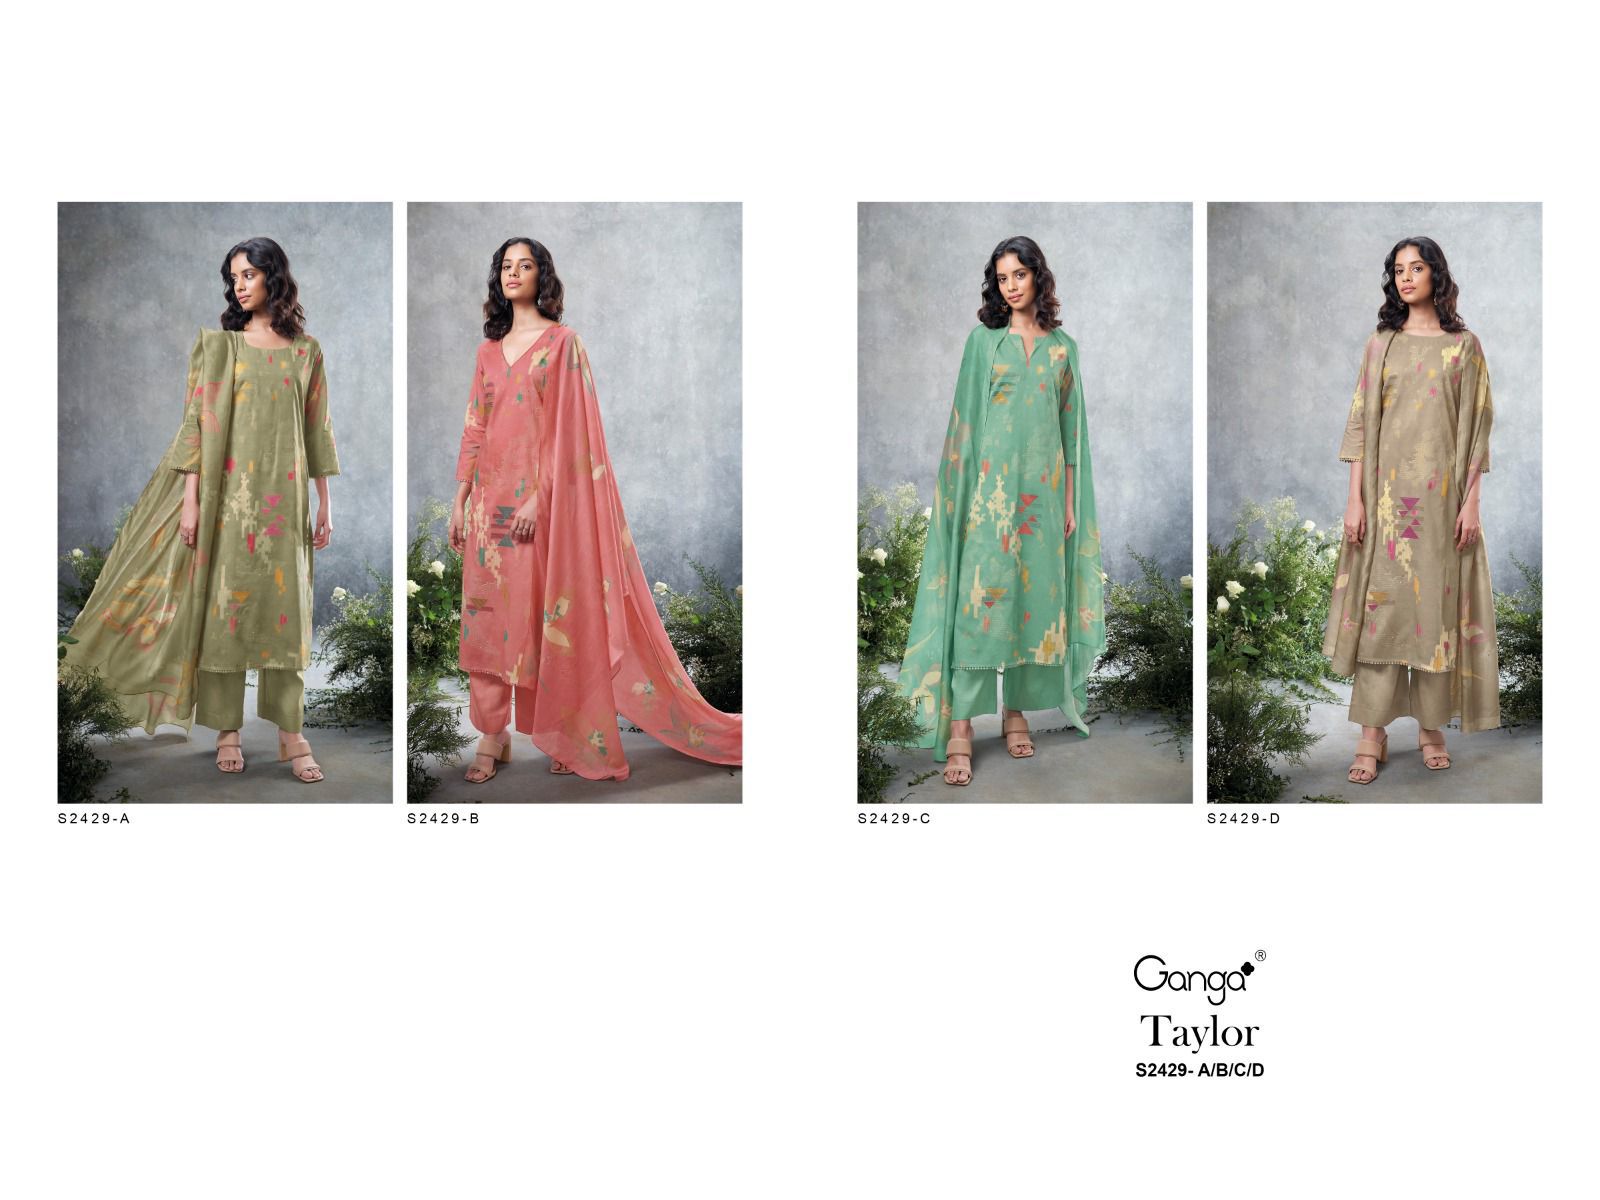 Taylor 2429 Ganga Cotton Plazzo Style Suits